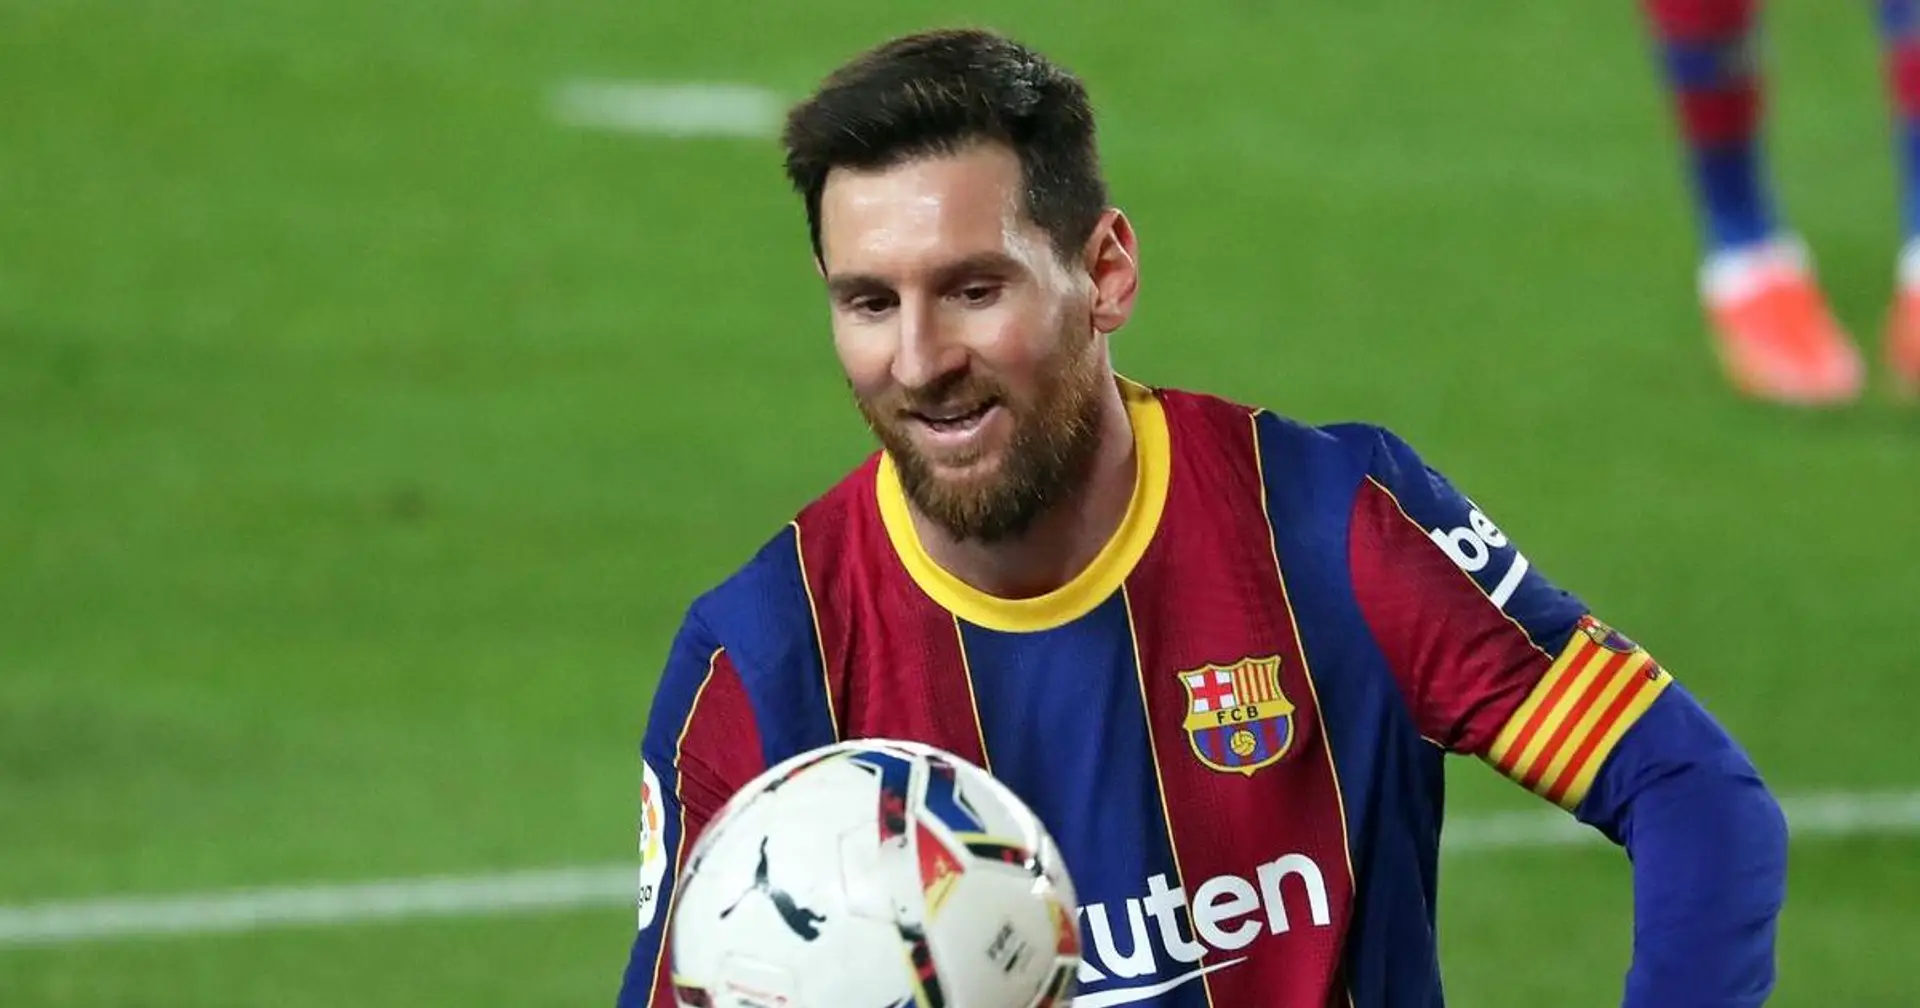 Leo Messi bat toutes sortes de records en 2021 - Voici un aperçu de 5